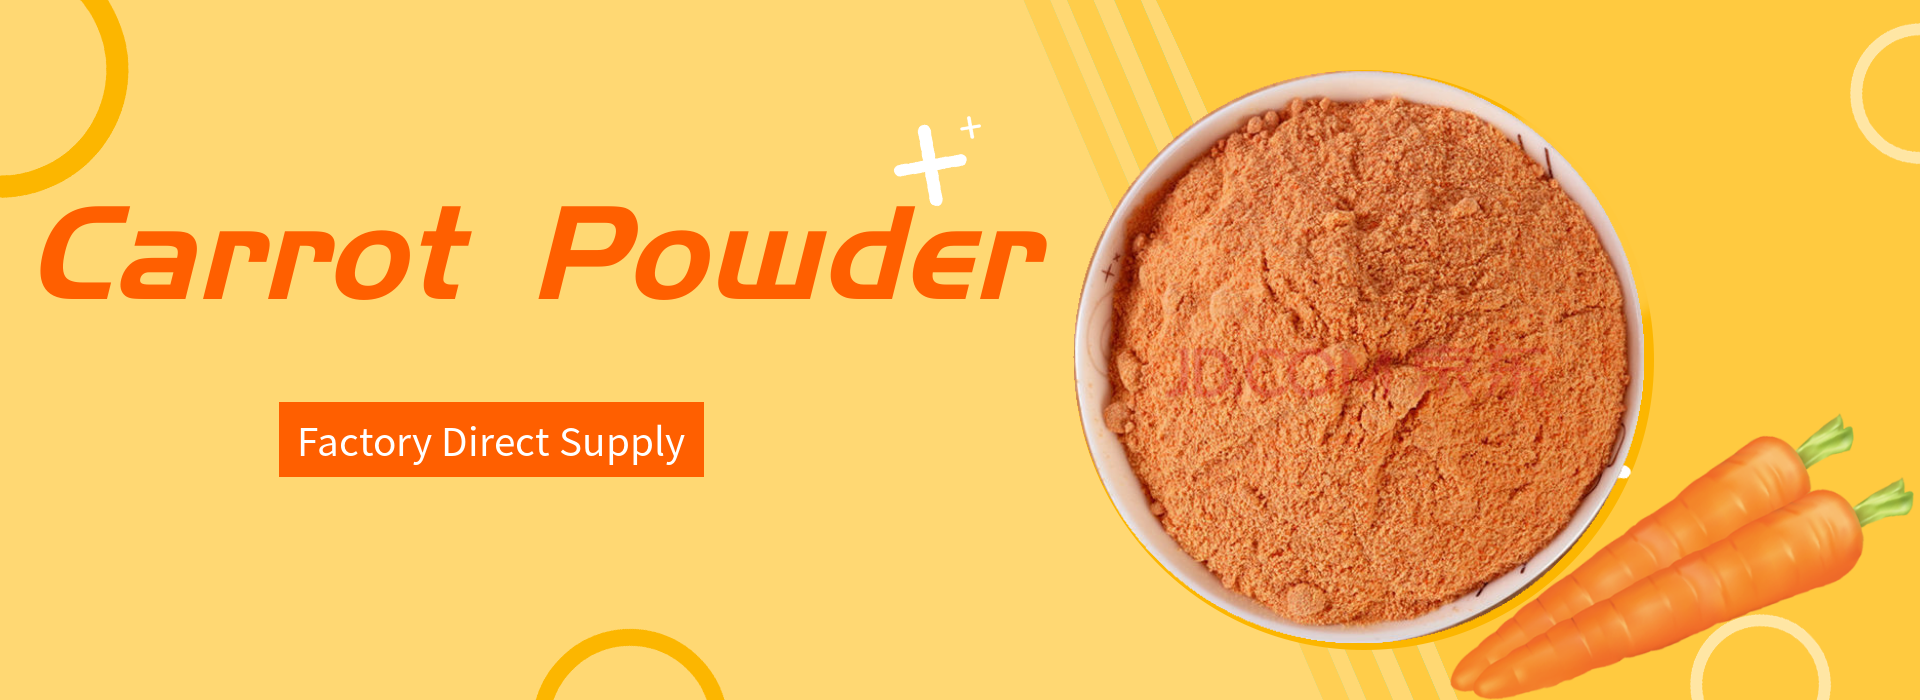 Carrot Powder1